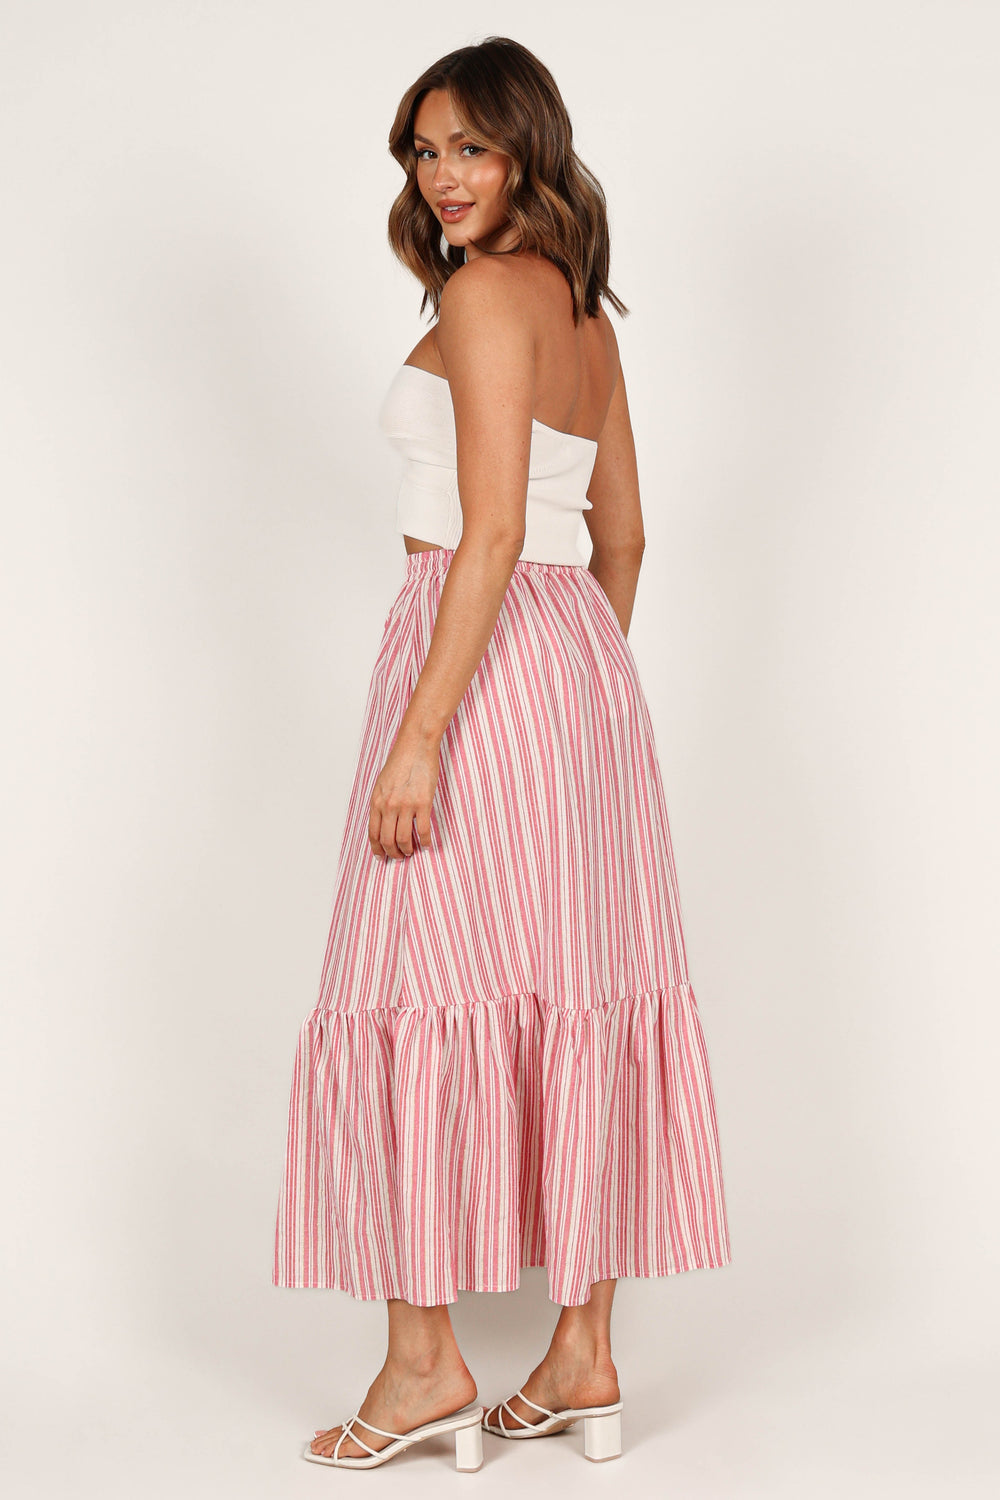 BOTTOMS Brianna Maxi Skirt - Pink Stripe